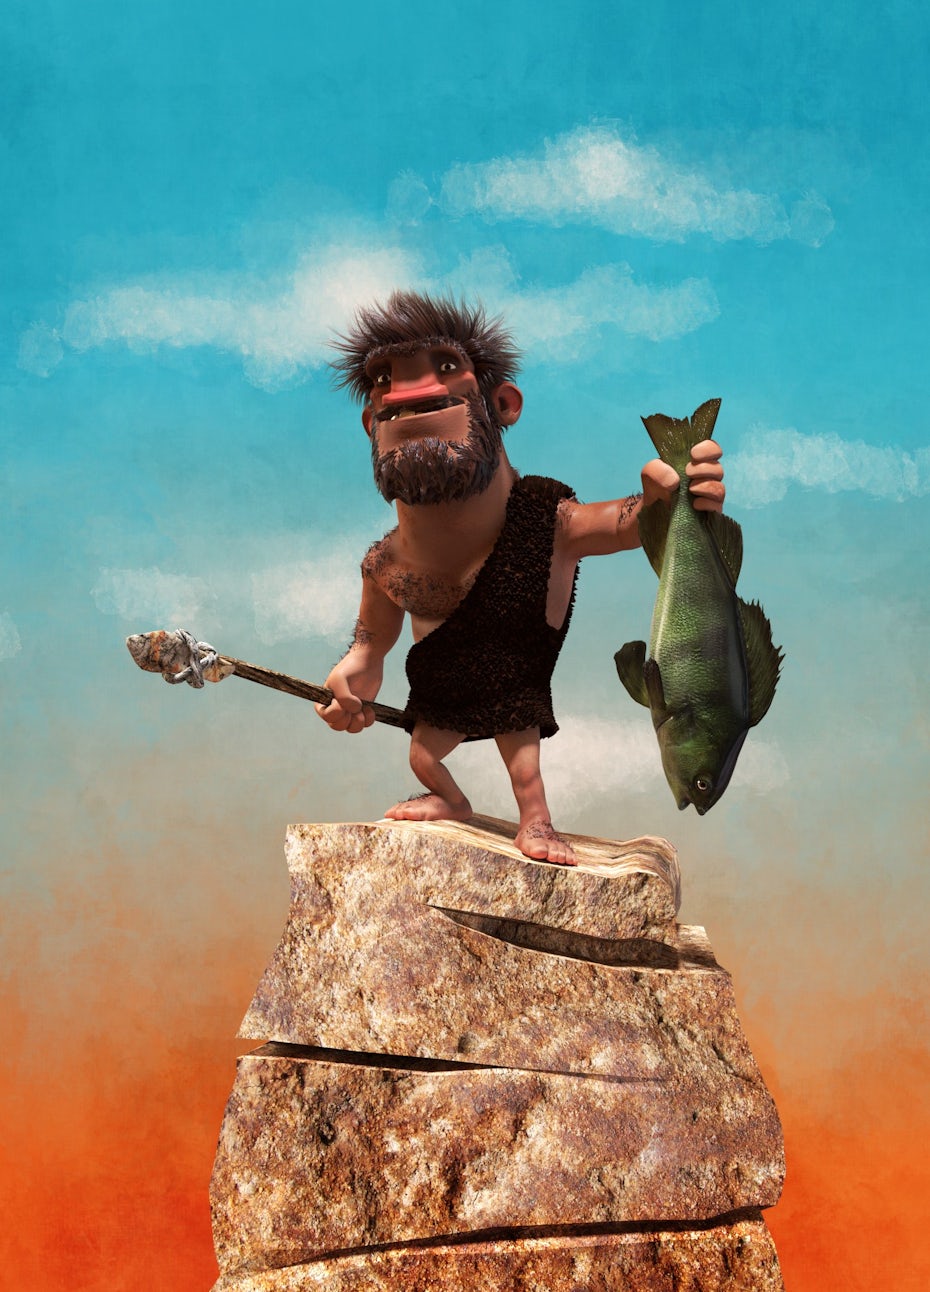 A 3D model of a caveman fishing character